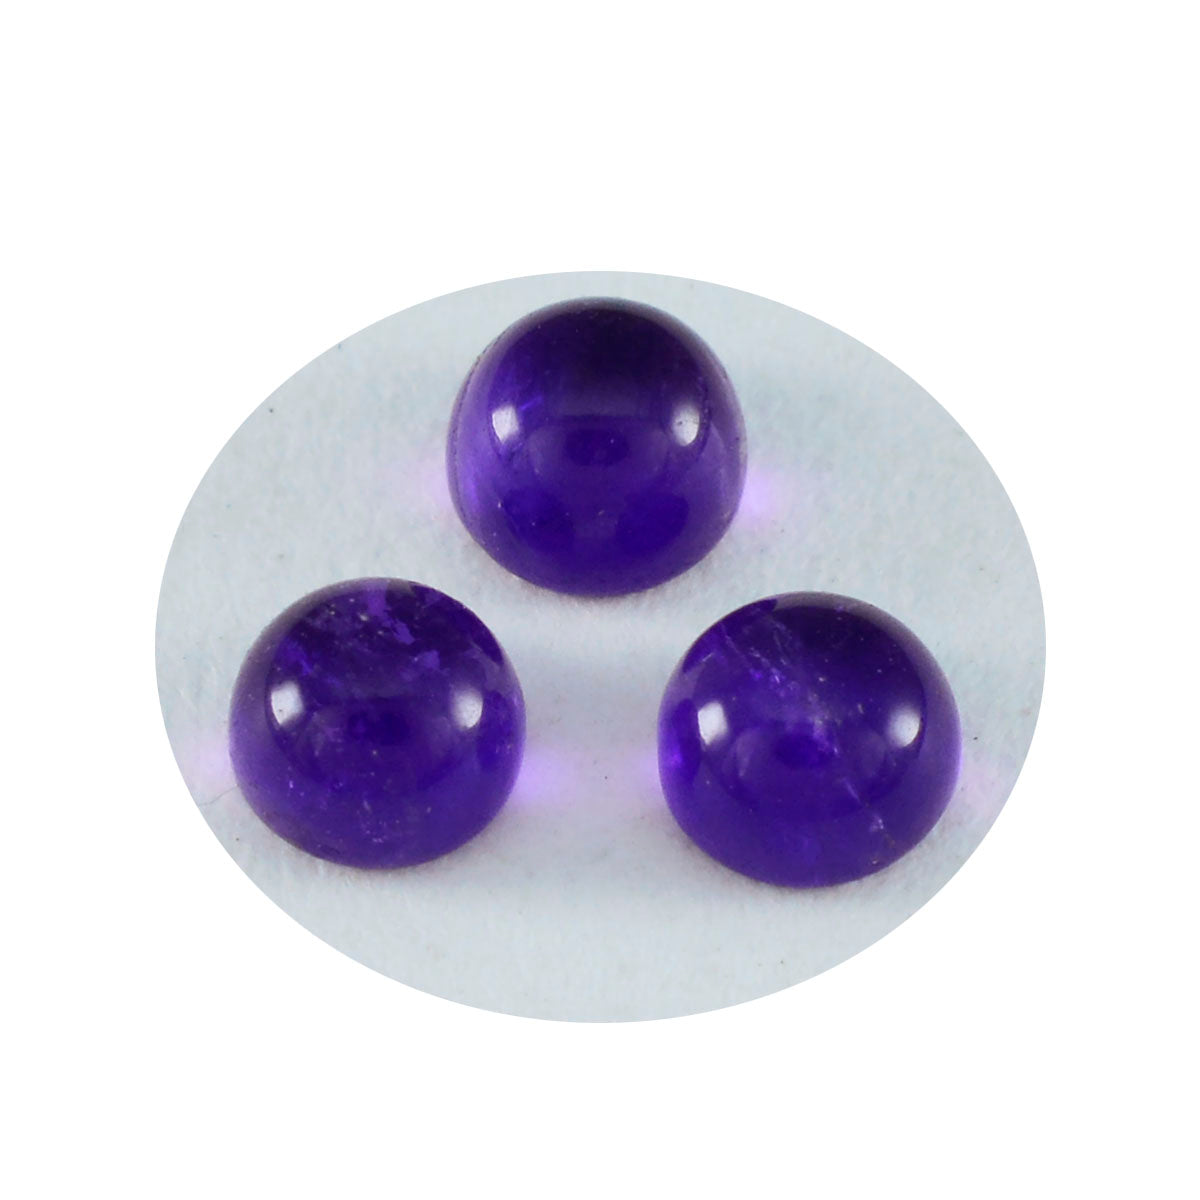 Riyogems 1PC Purple Amethyst Cabochon 6x6 mm Round Shape beauty Quality Loose Stone